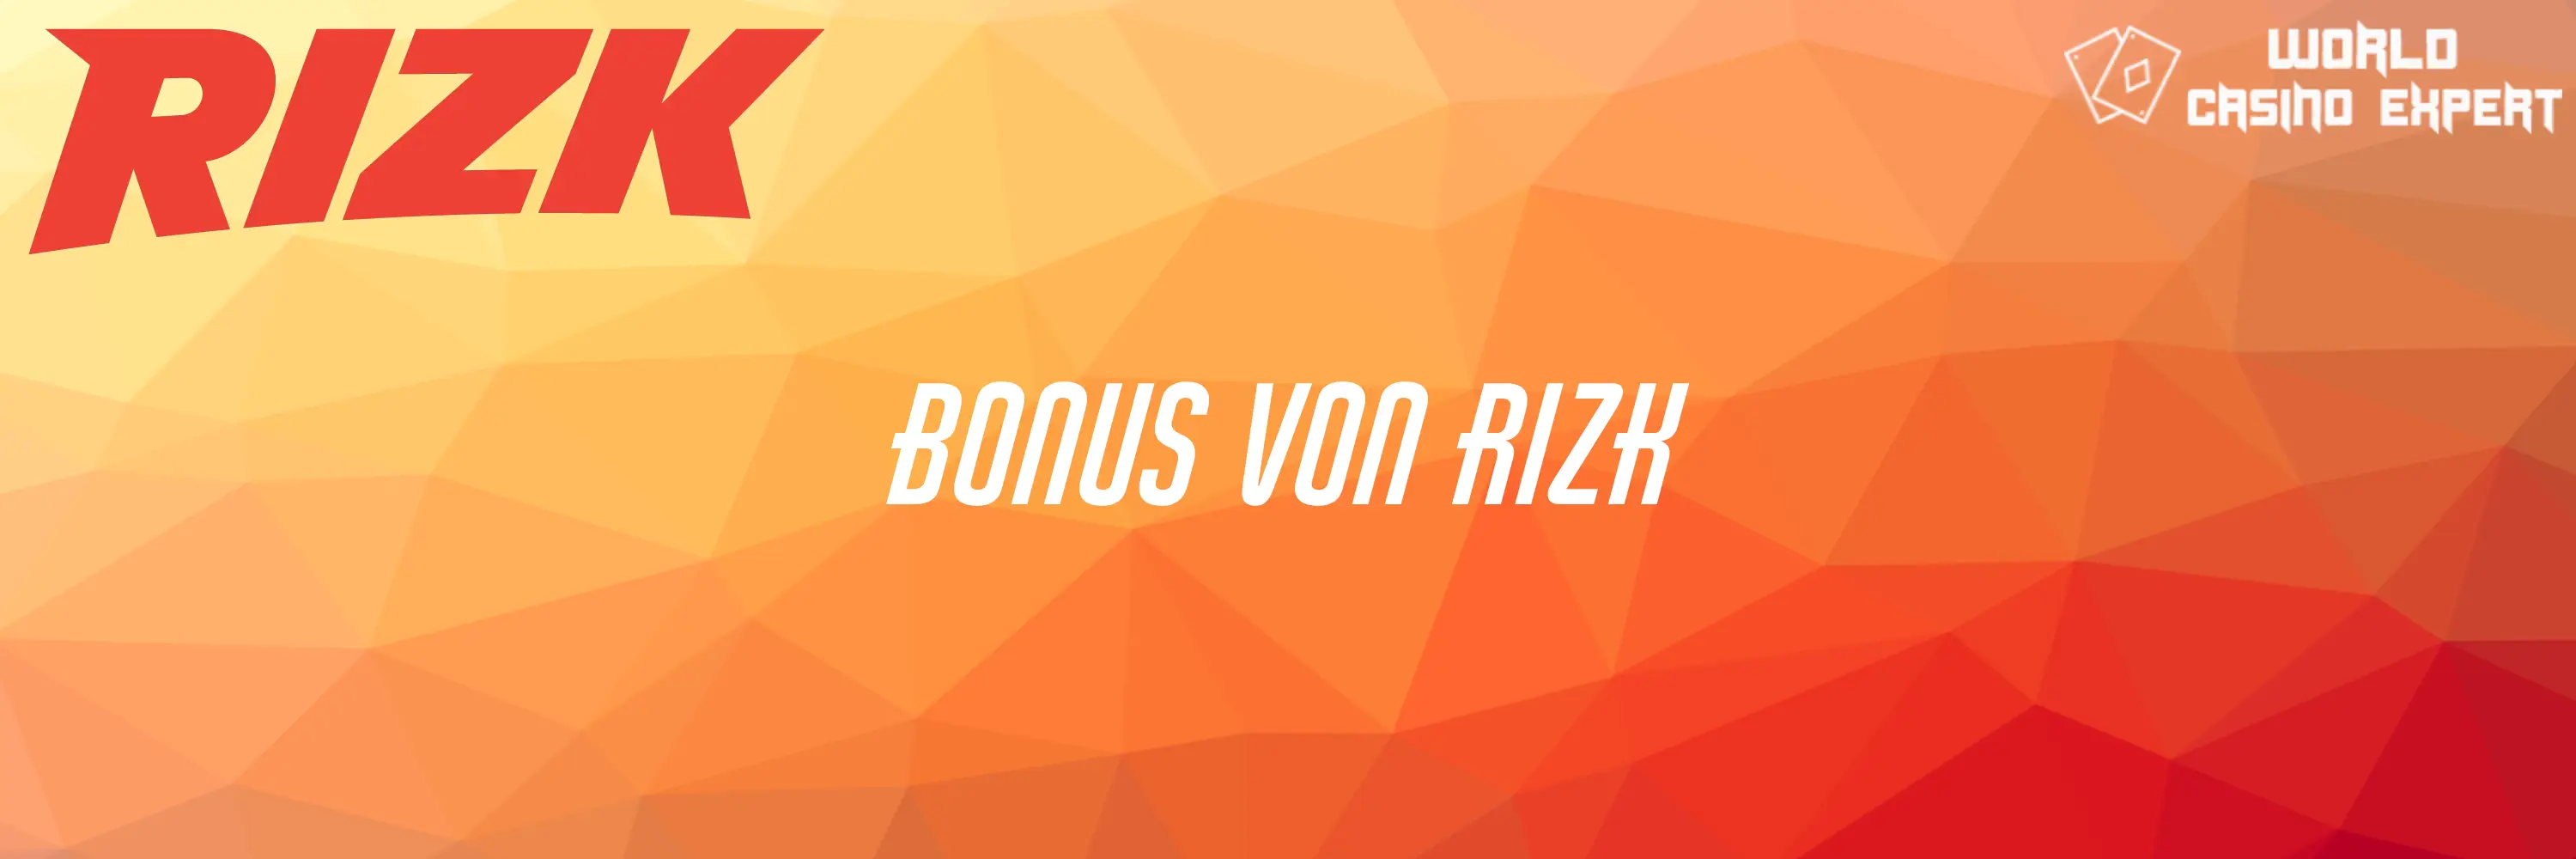 Bonus von Rizk